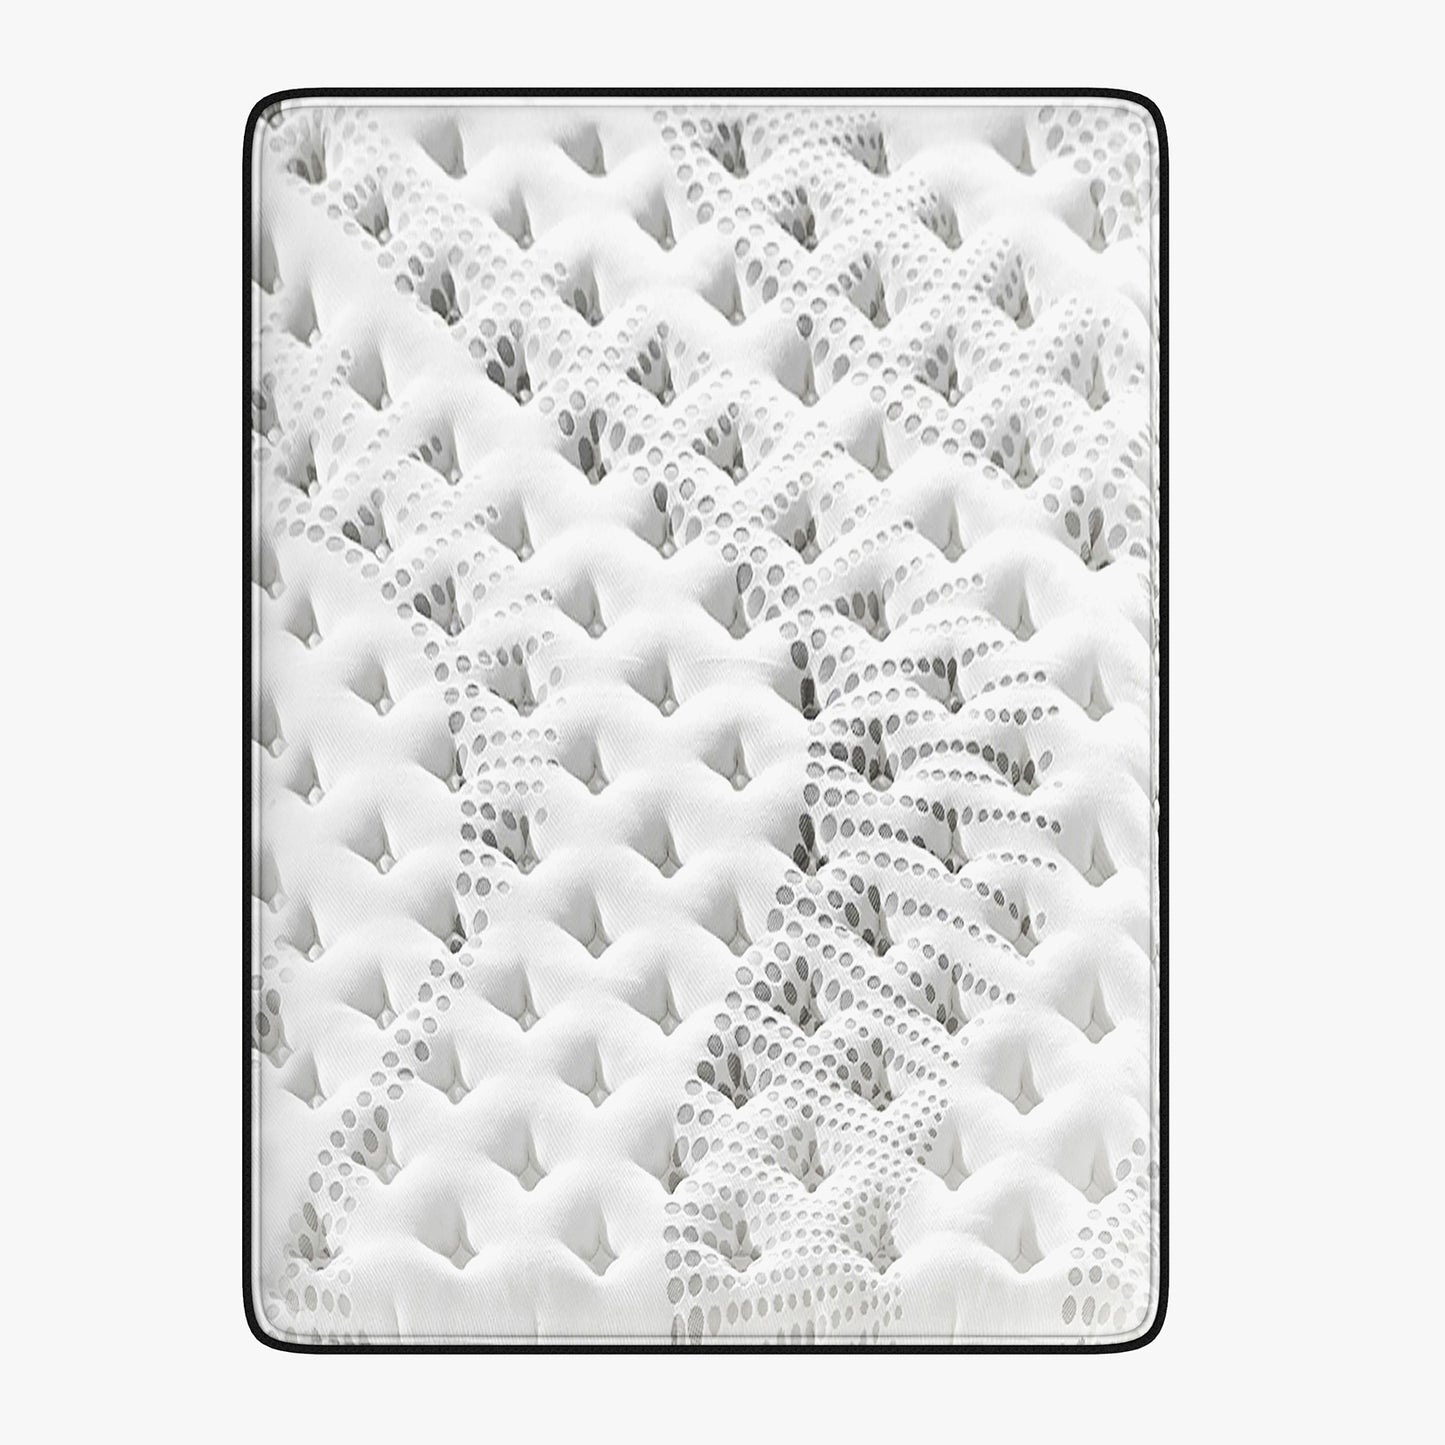 Luxopedic Pocket Spring Mattress 5 Zone 32CM Euro Top Memory Foam Medium Firm - Double - White  Grey